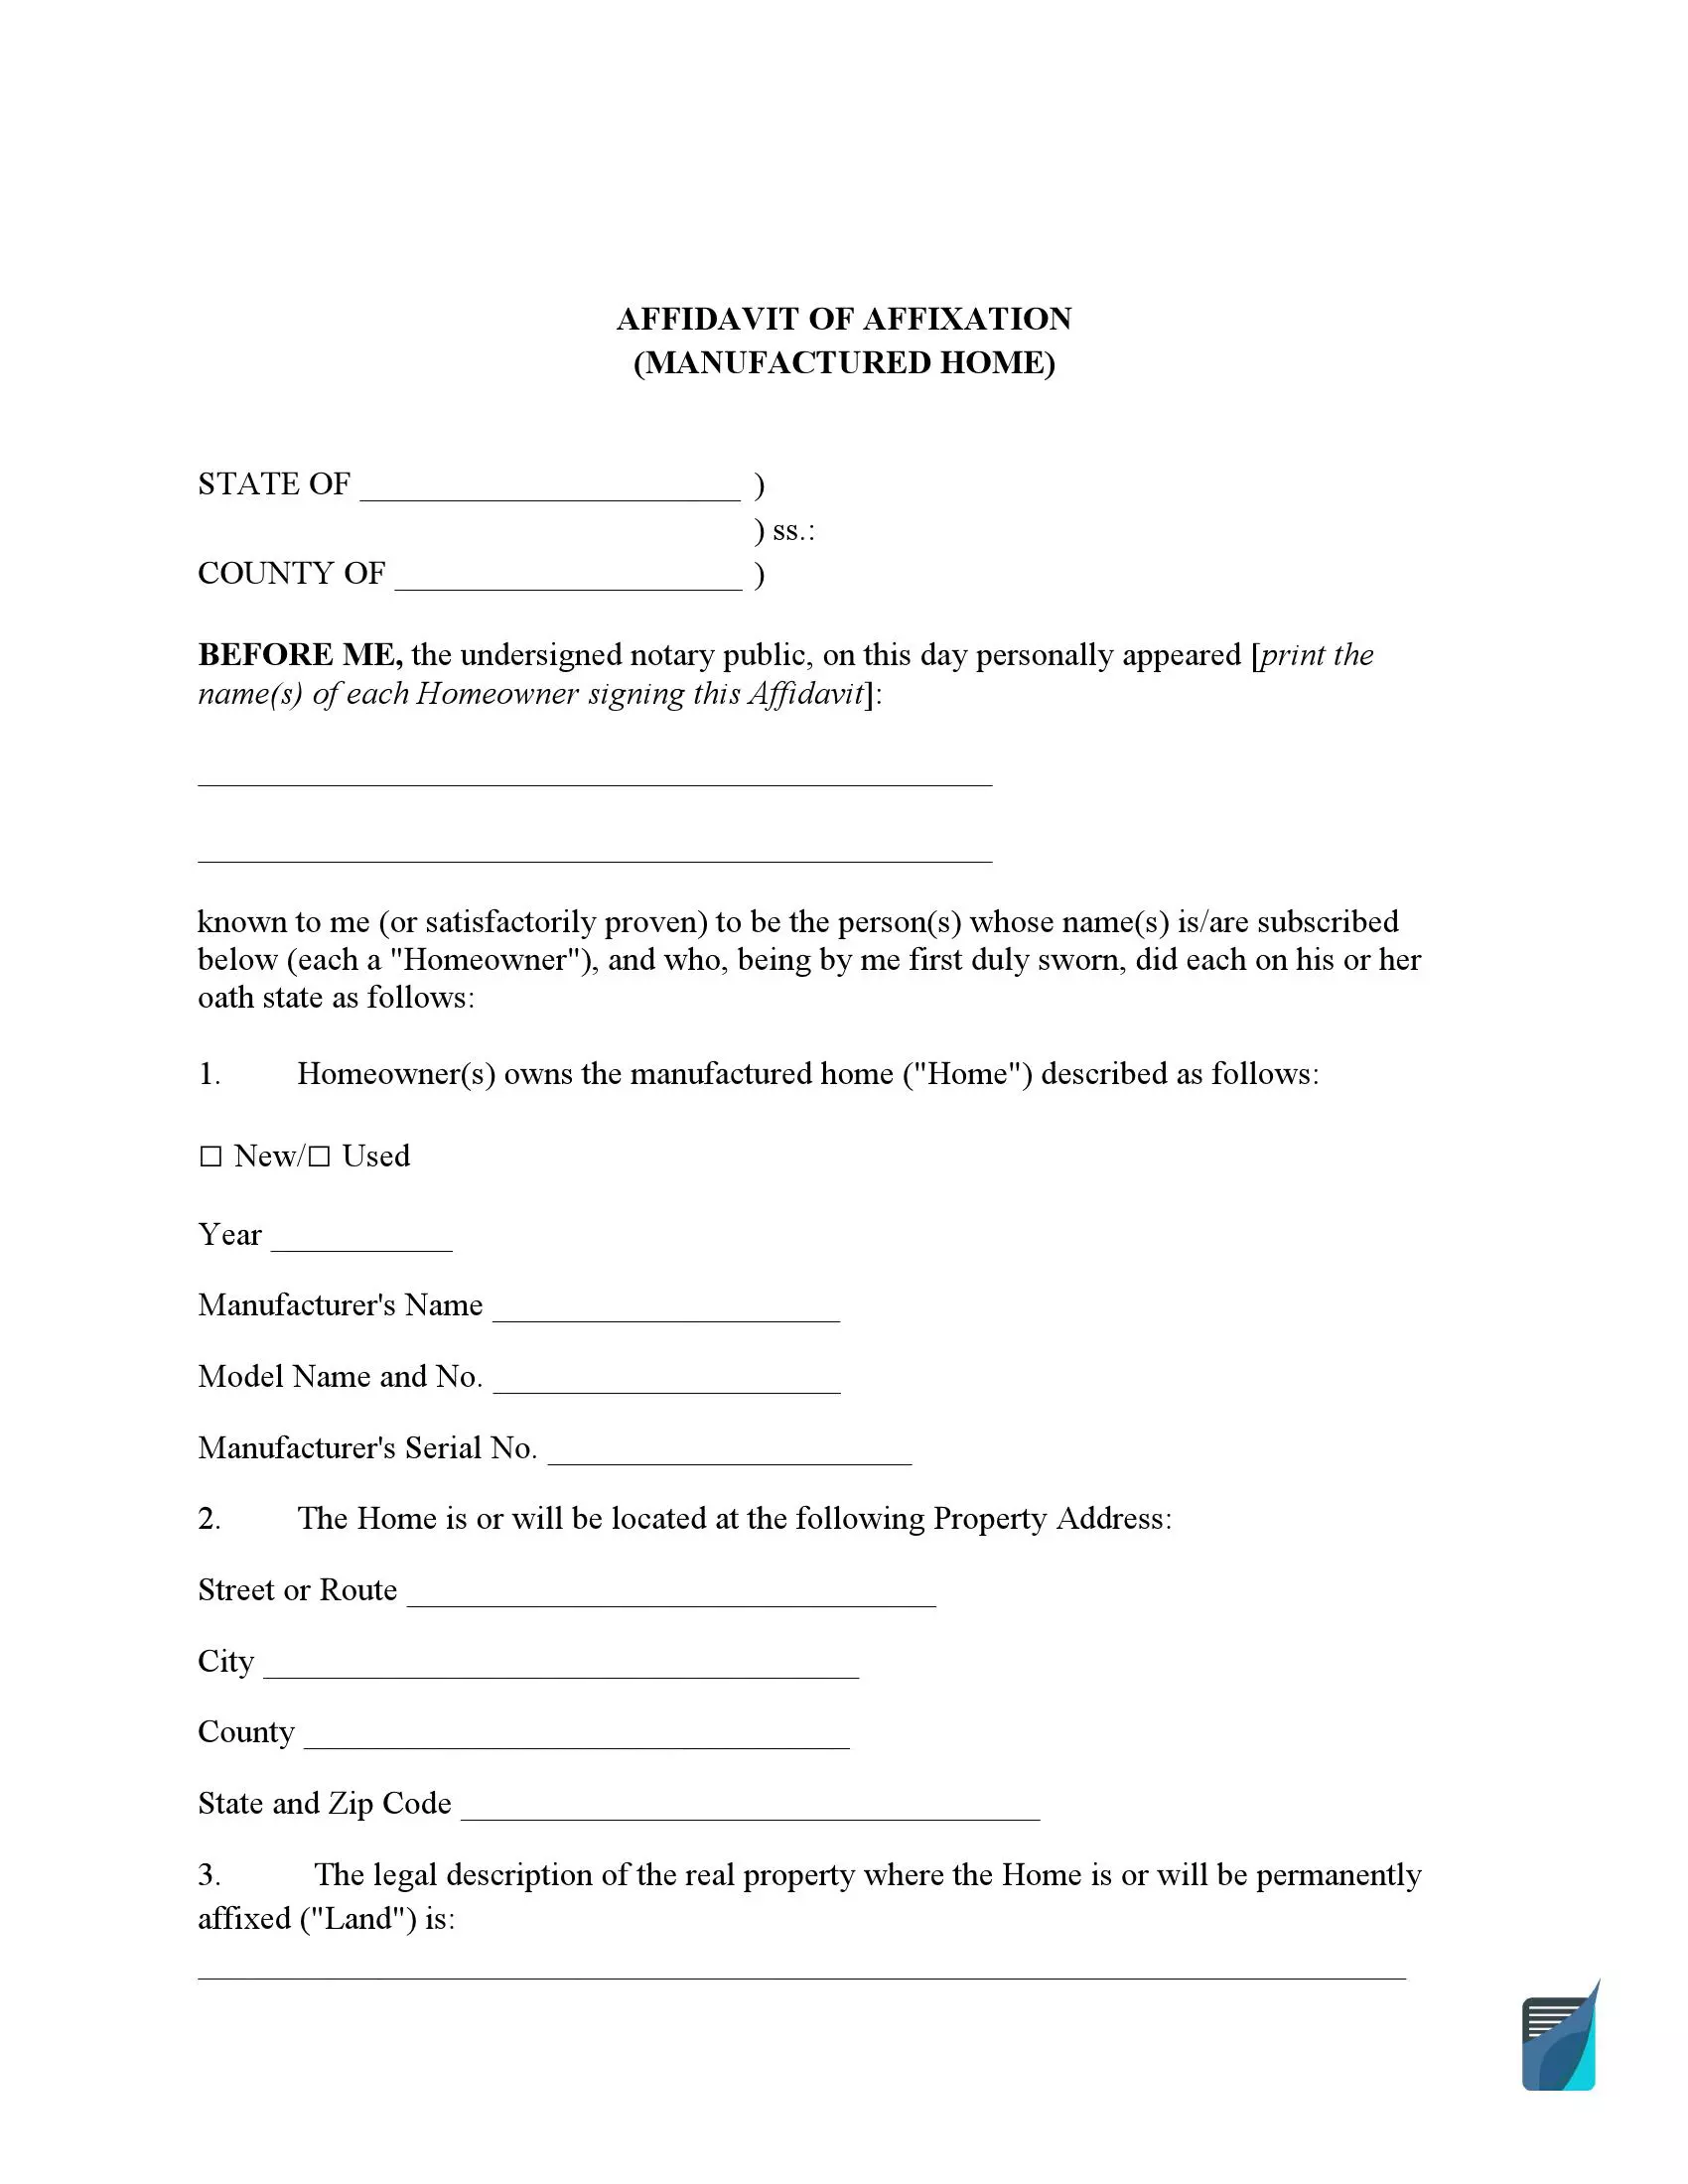 Affidavit of Affixation form-preview